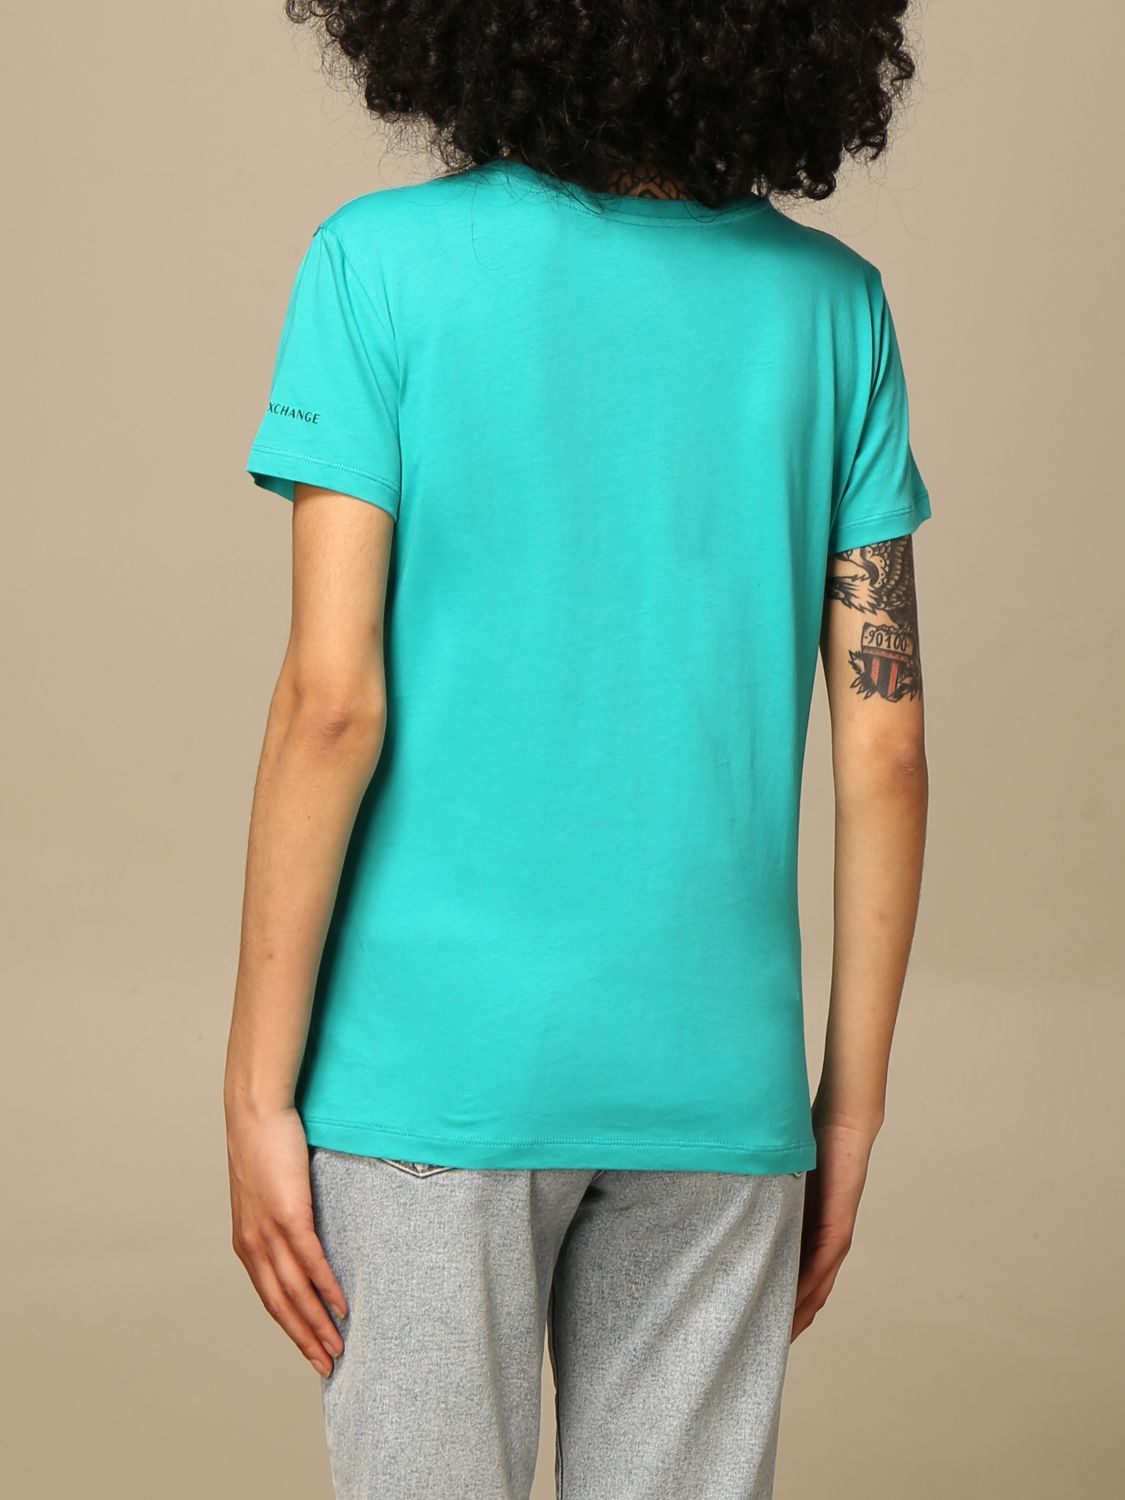 ARMANI EXCHANGE tshirt for women Green Armani Exchange tshirt